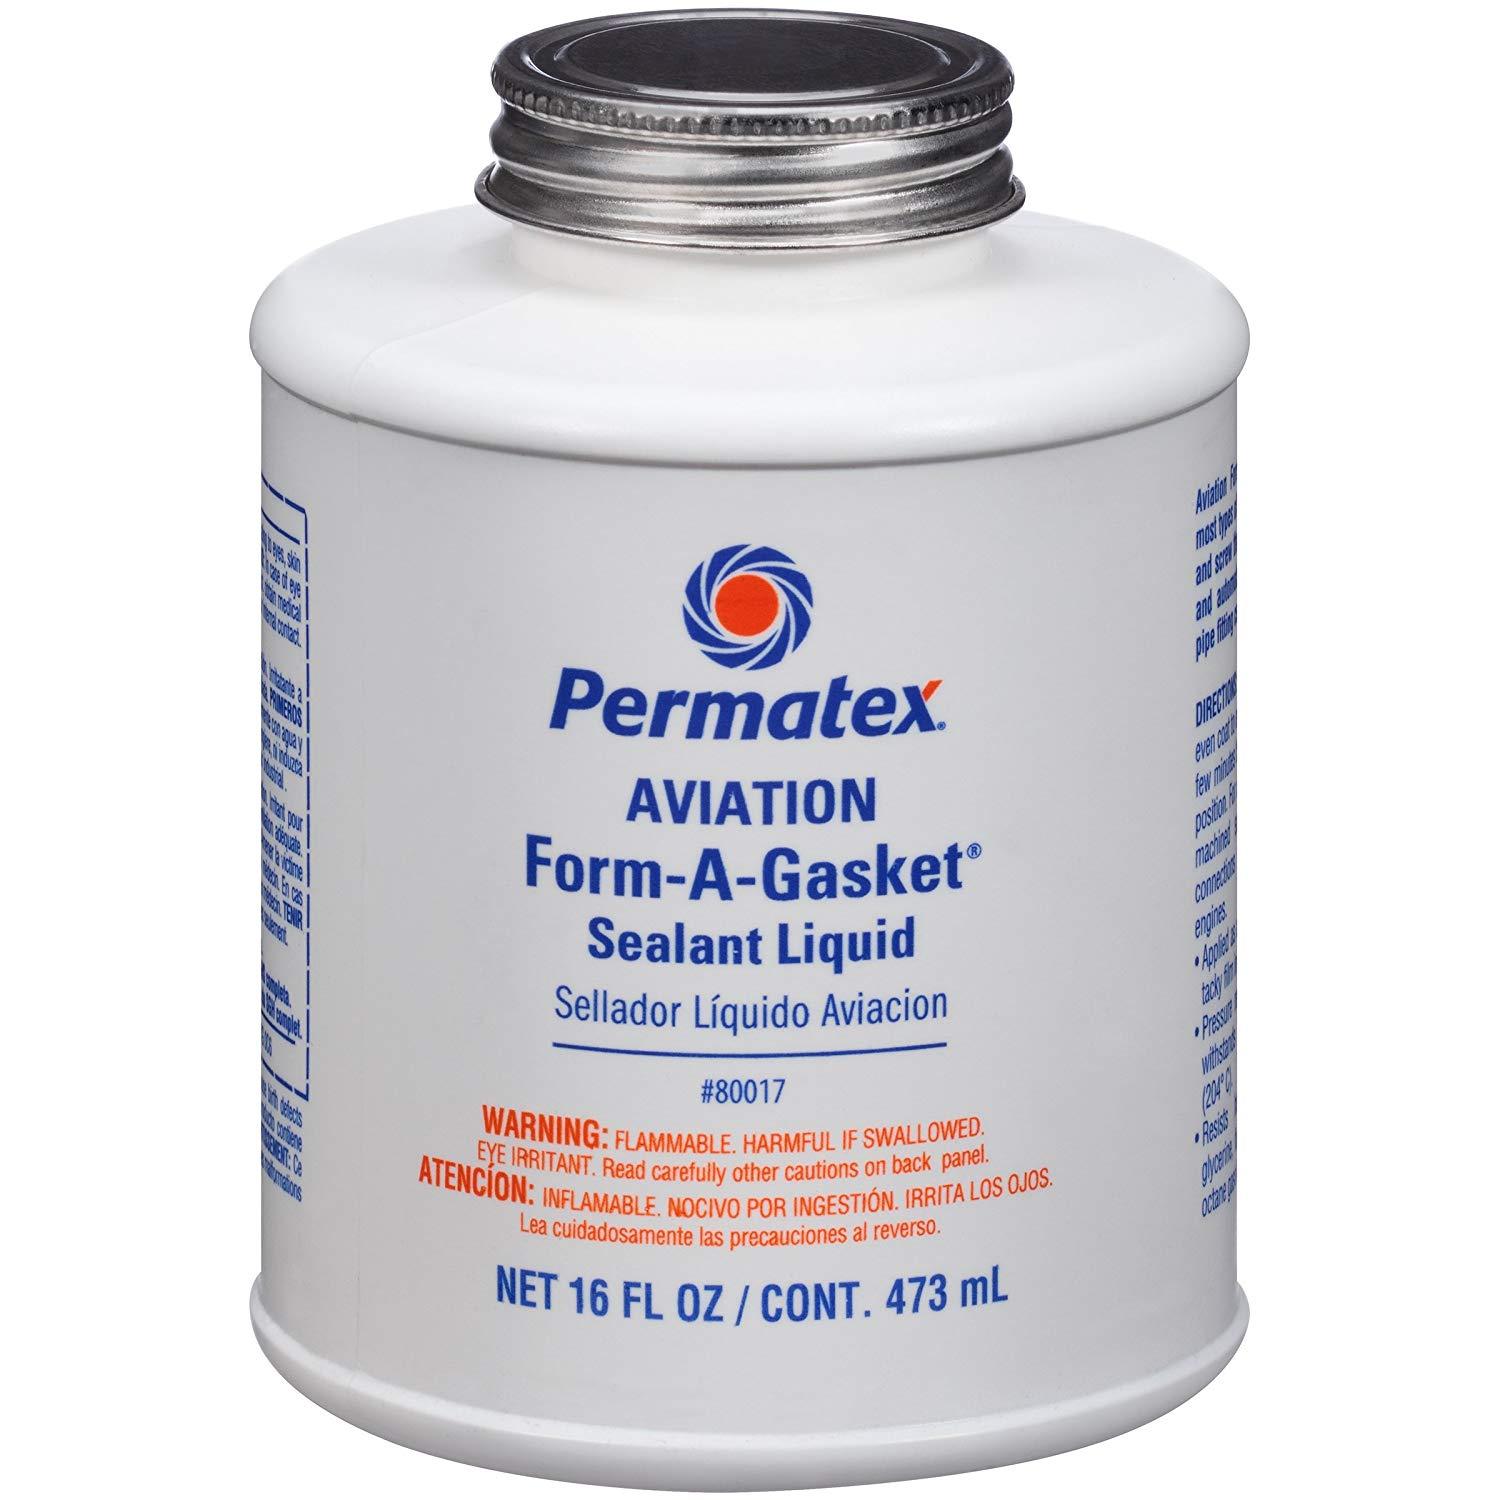 Permatex Gasket Sealant, Form-A, No. 1 - 11 oz